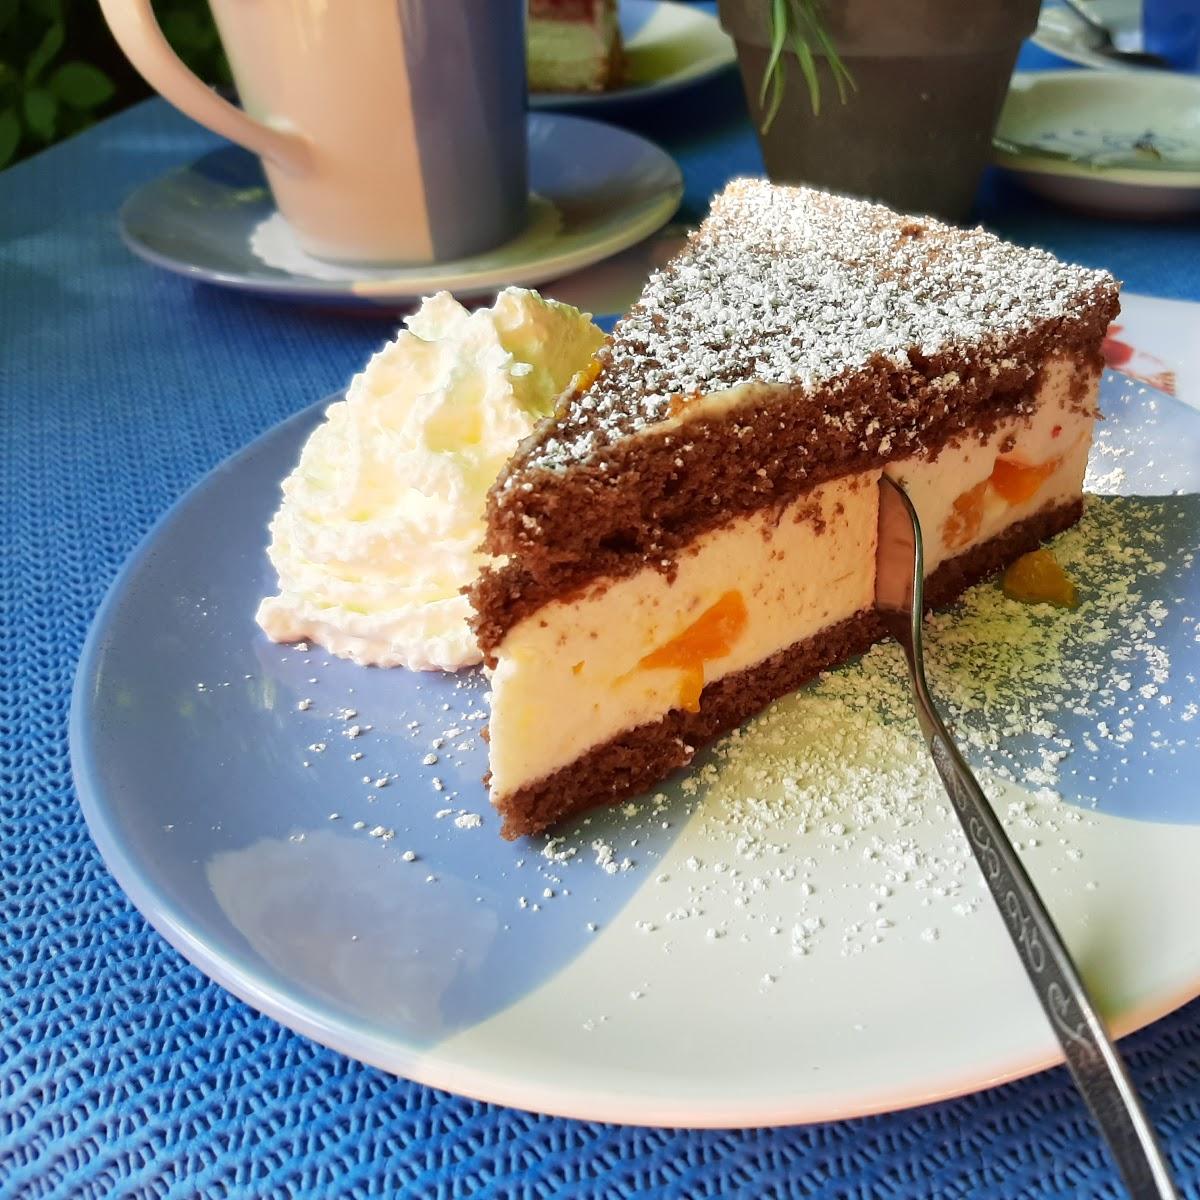 Restaurant "Parkcafé - Simones Café" in Wiesenburg-Mark